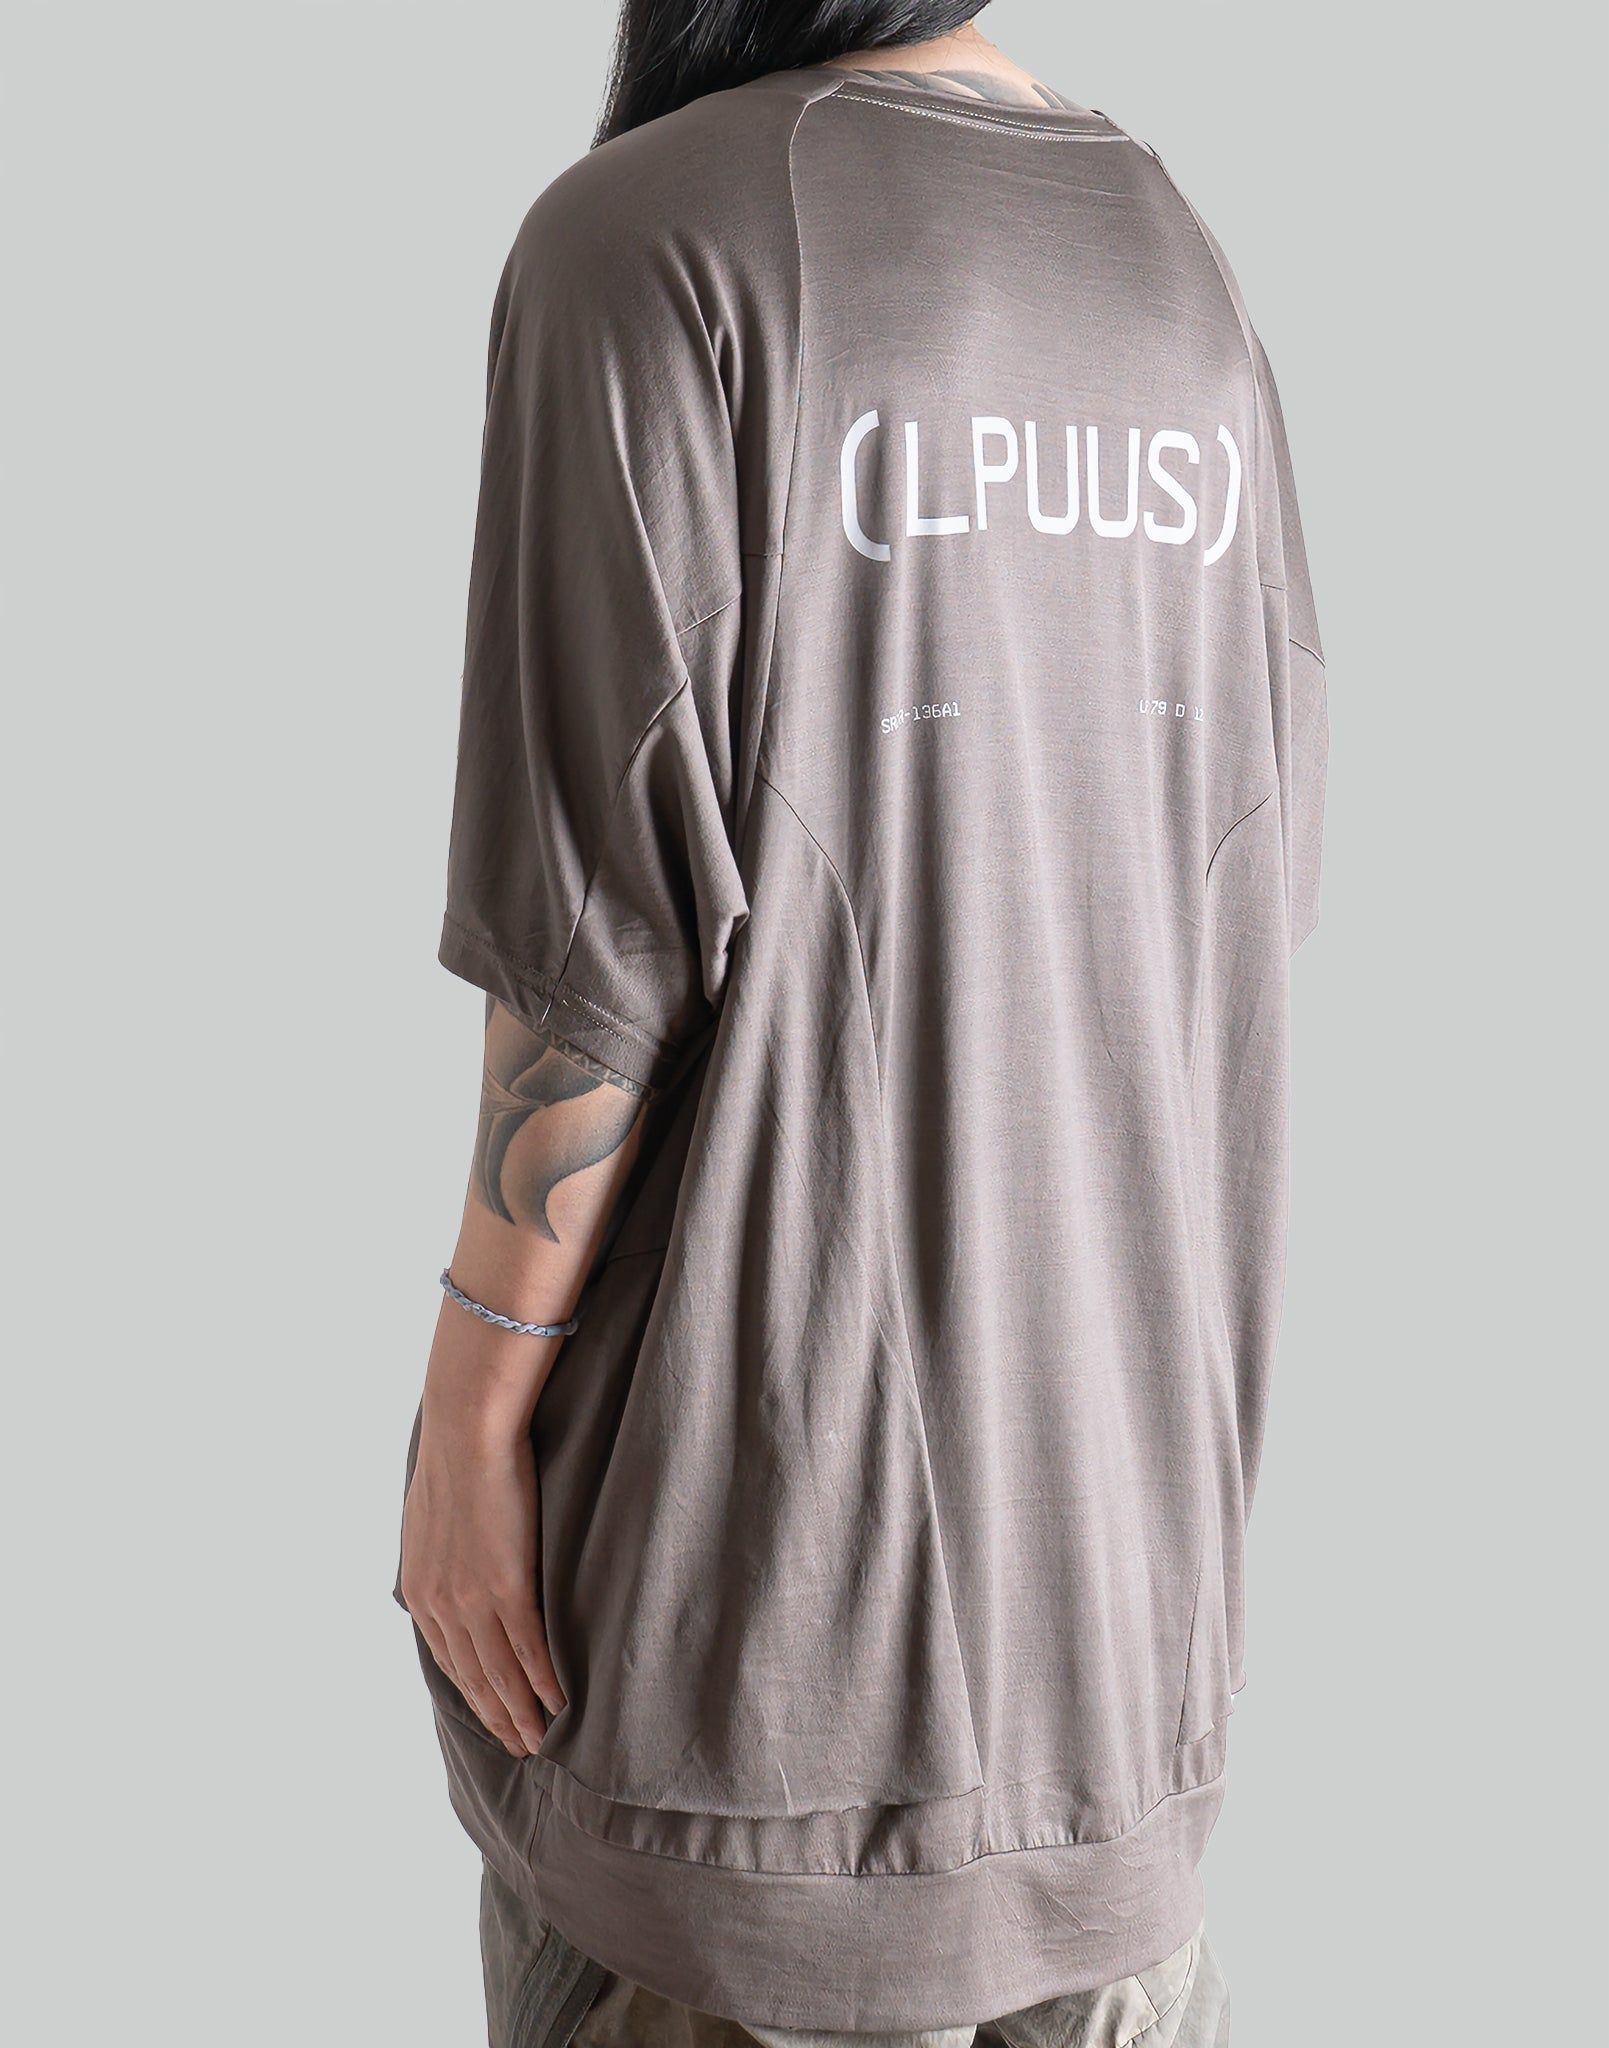 HAMCUS LPU / LPUUS Standard T-Shirts - 082plus